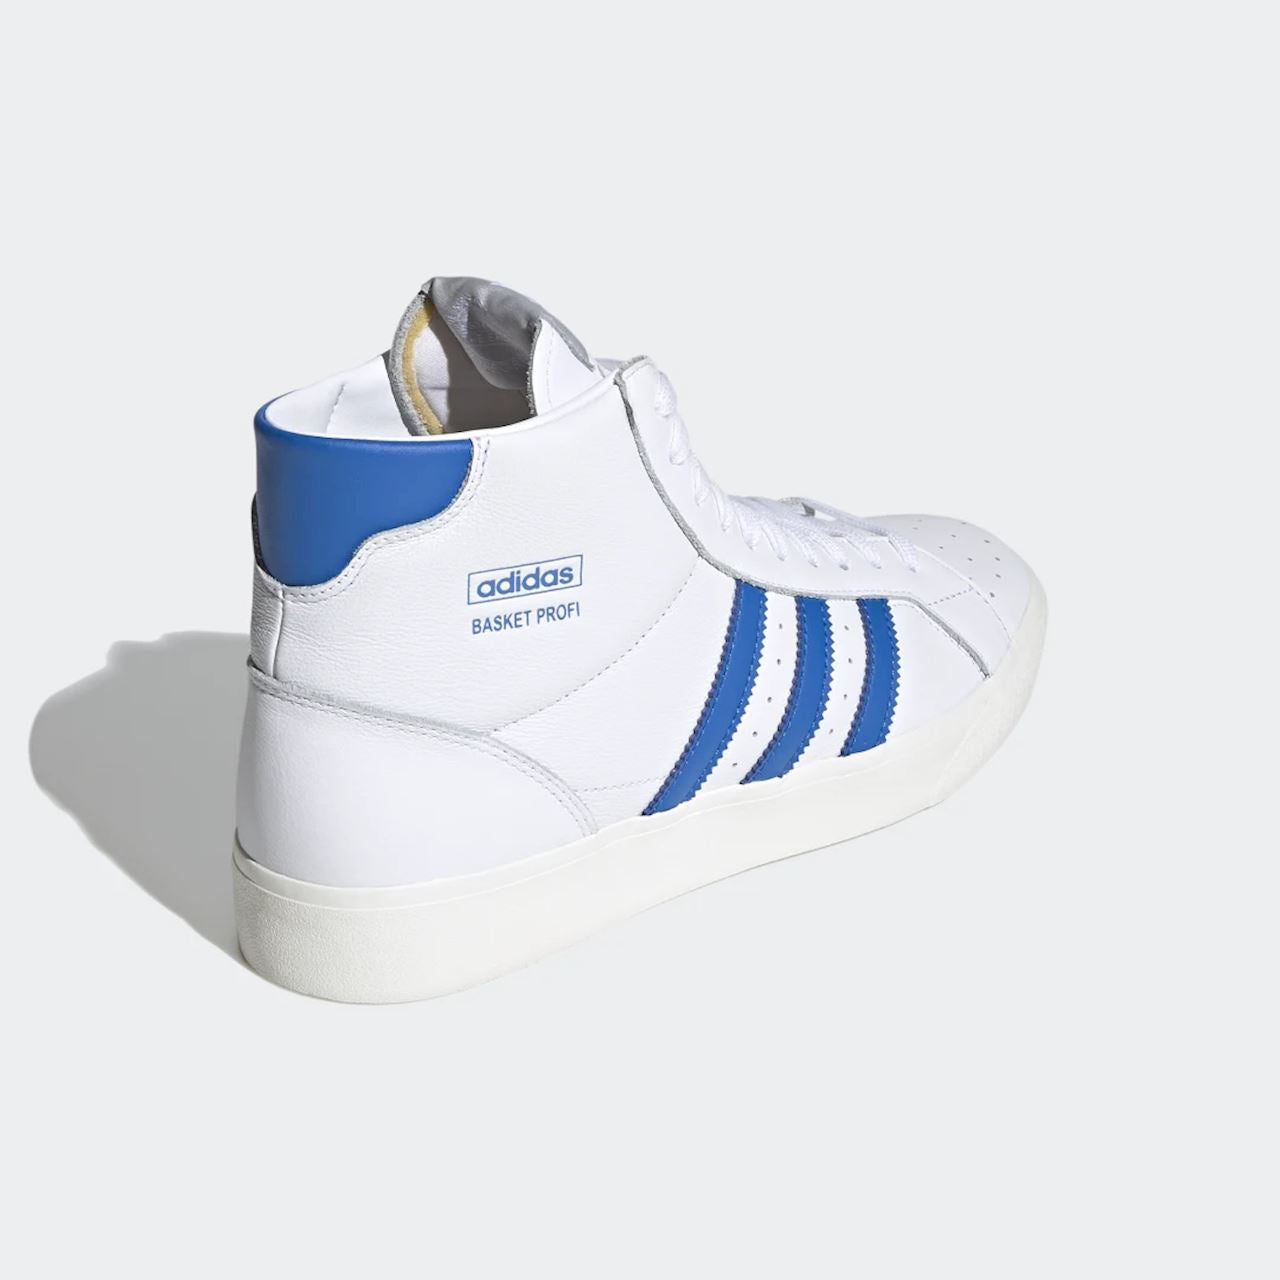 Adidas Originals Men's Profi Mid Shoes - White UK 4.5 - Trade Sports